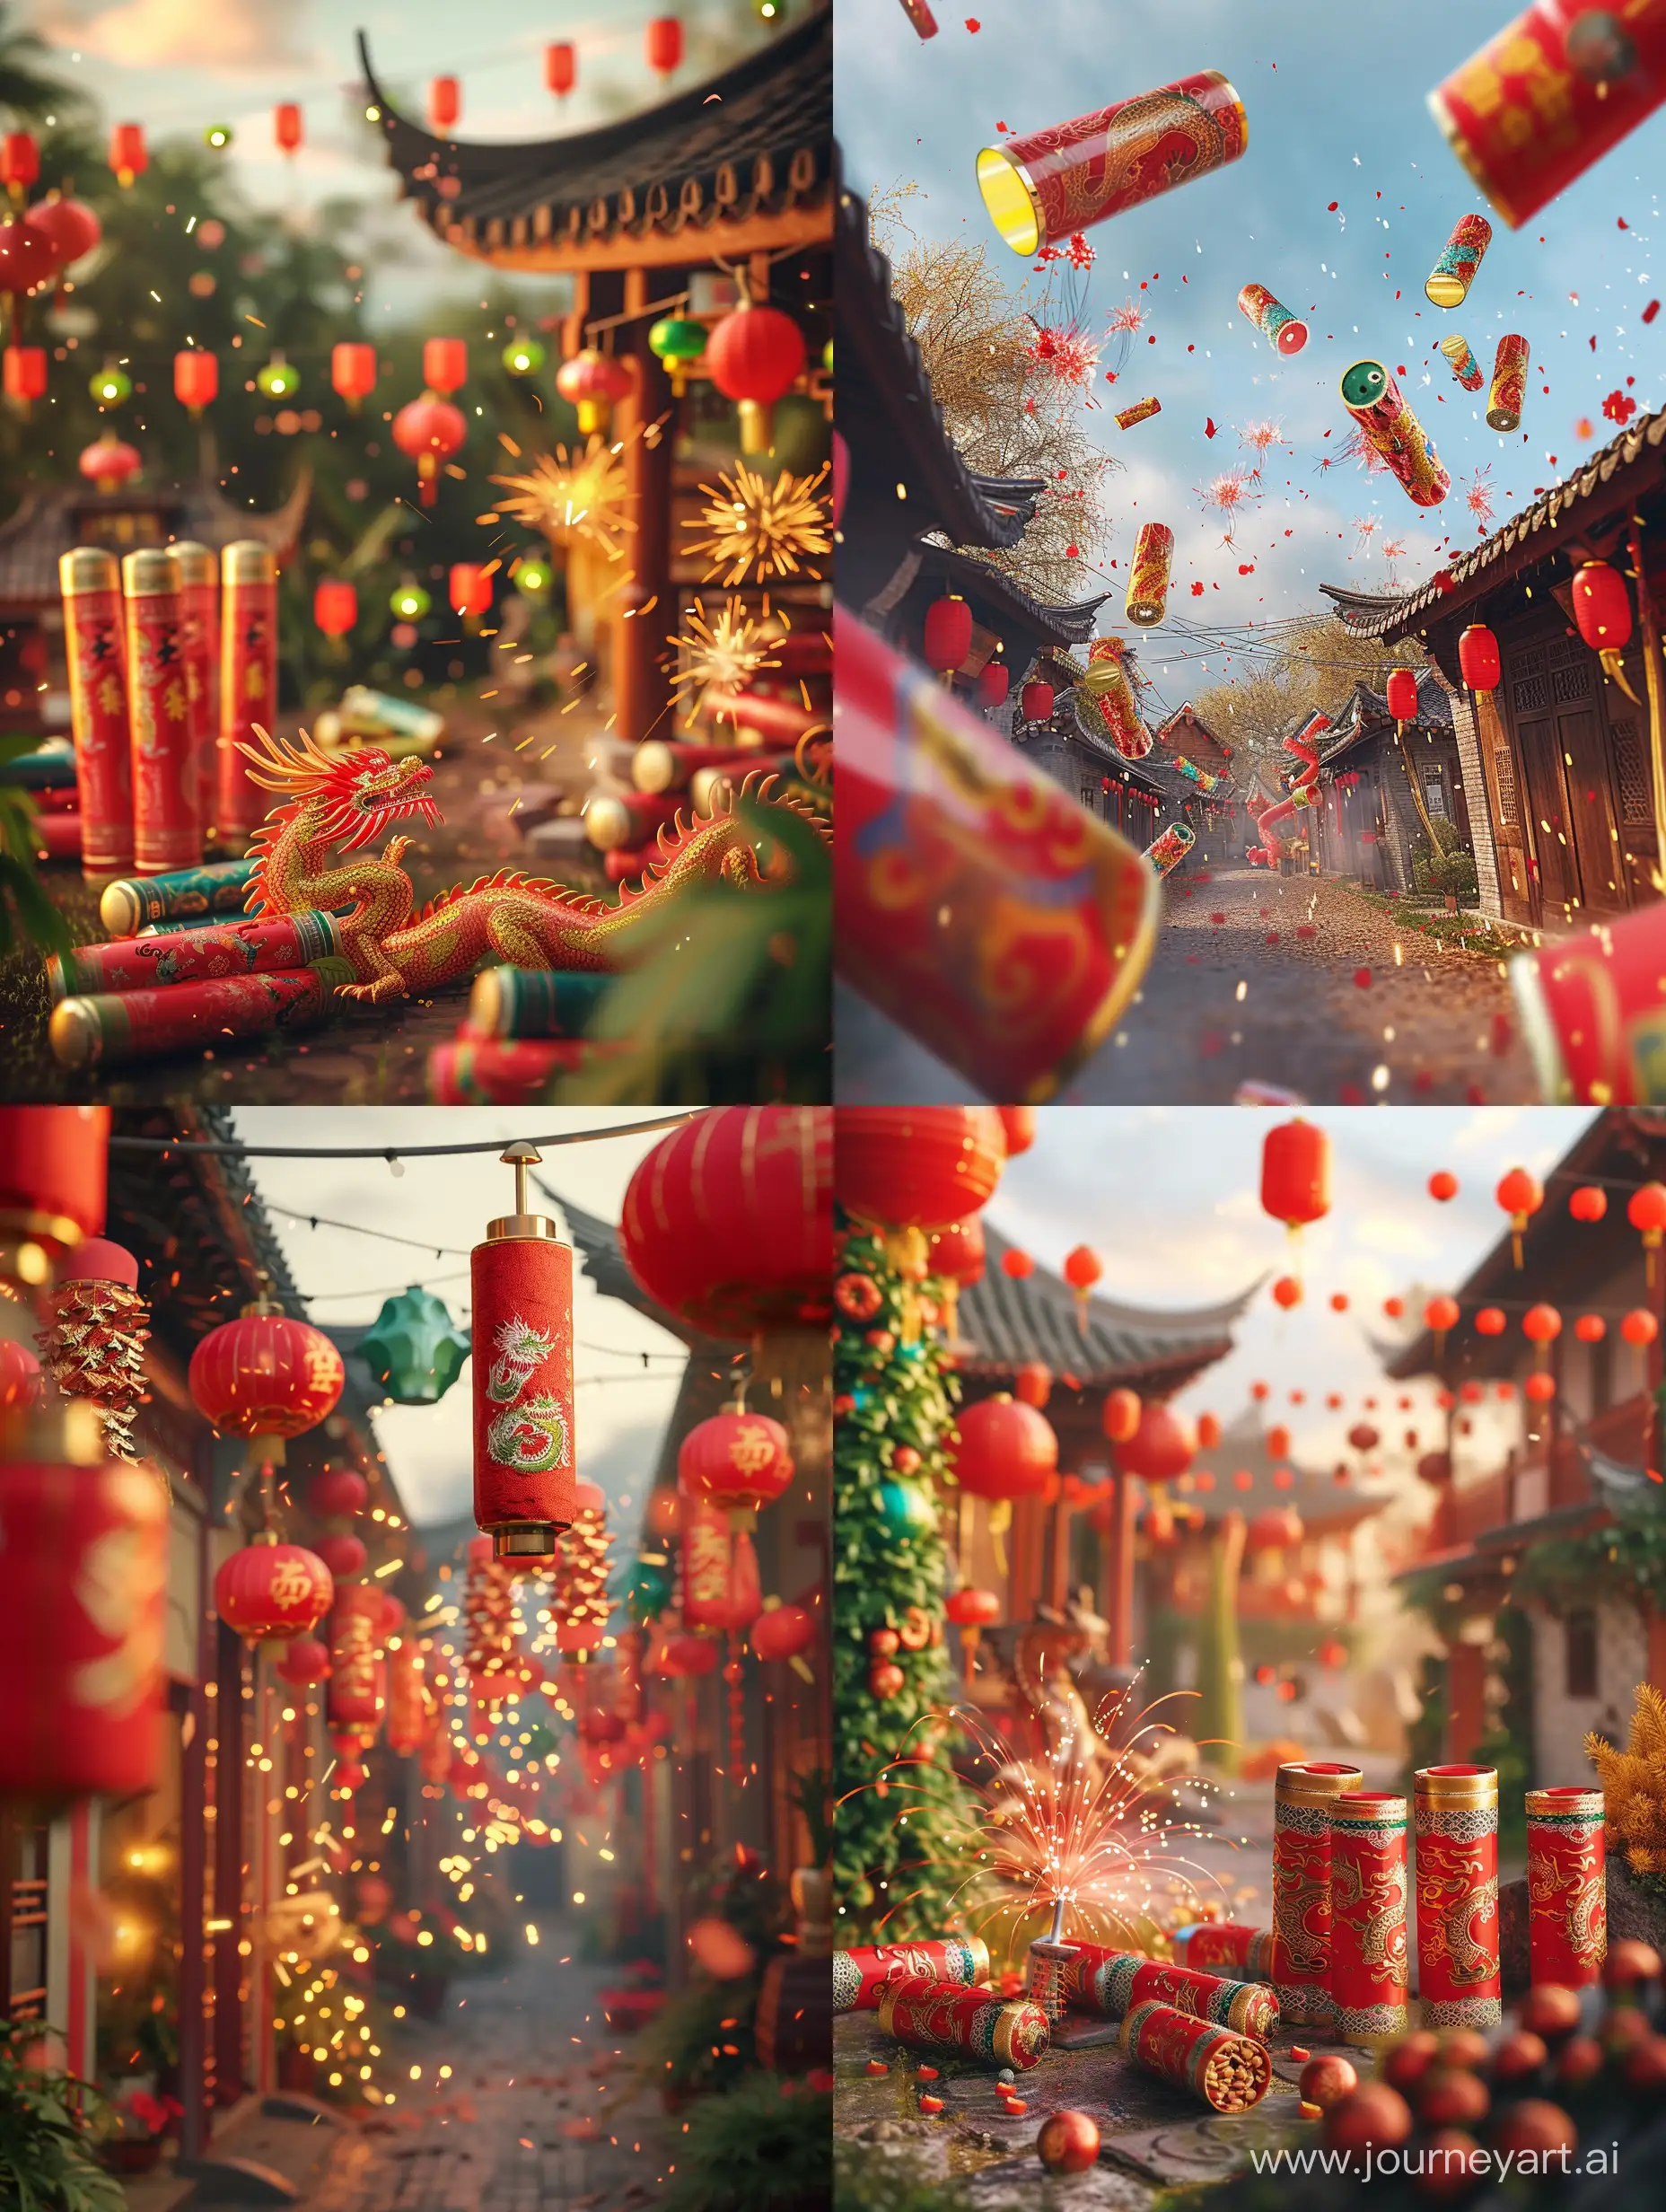 (Chinese Zodiac Dragon), (Lunar New Year celebration), (Firecrackers), (Red lanterns), (Joyful atmosphere), (Traditional Asian village), (Nelson Wu), (Red), (Gold), (Green), (High precision), (Medium shot).